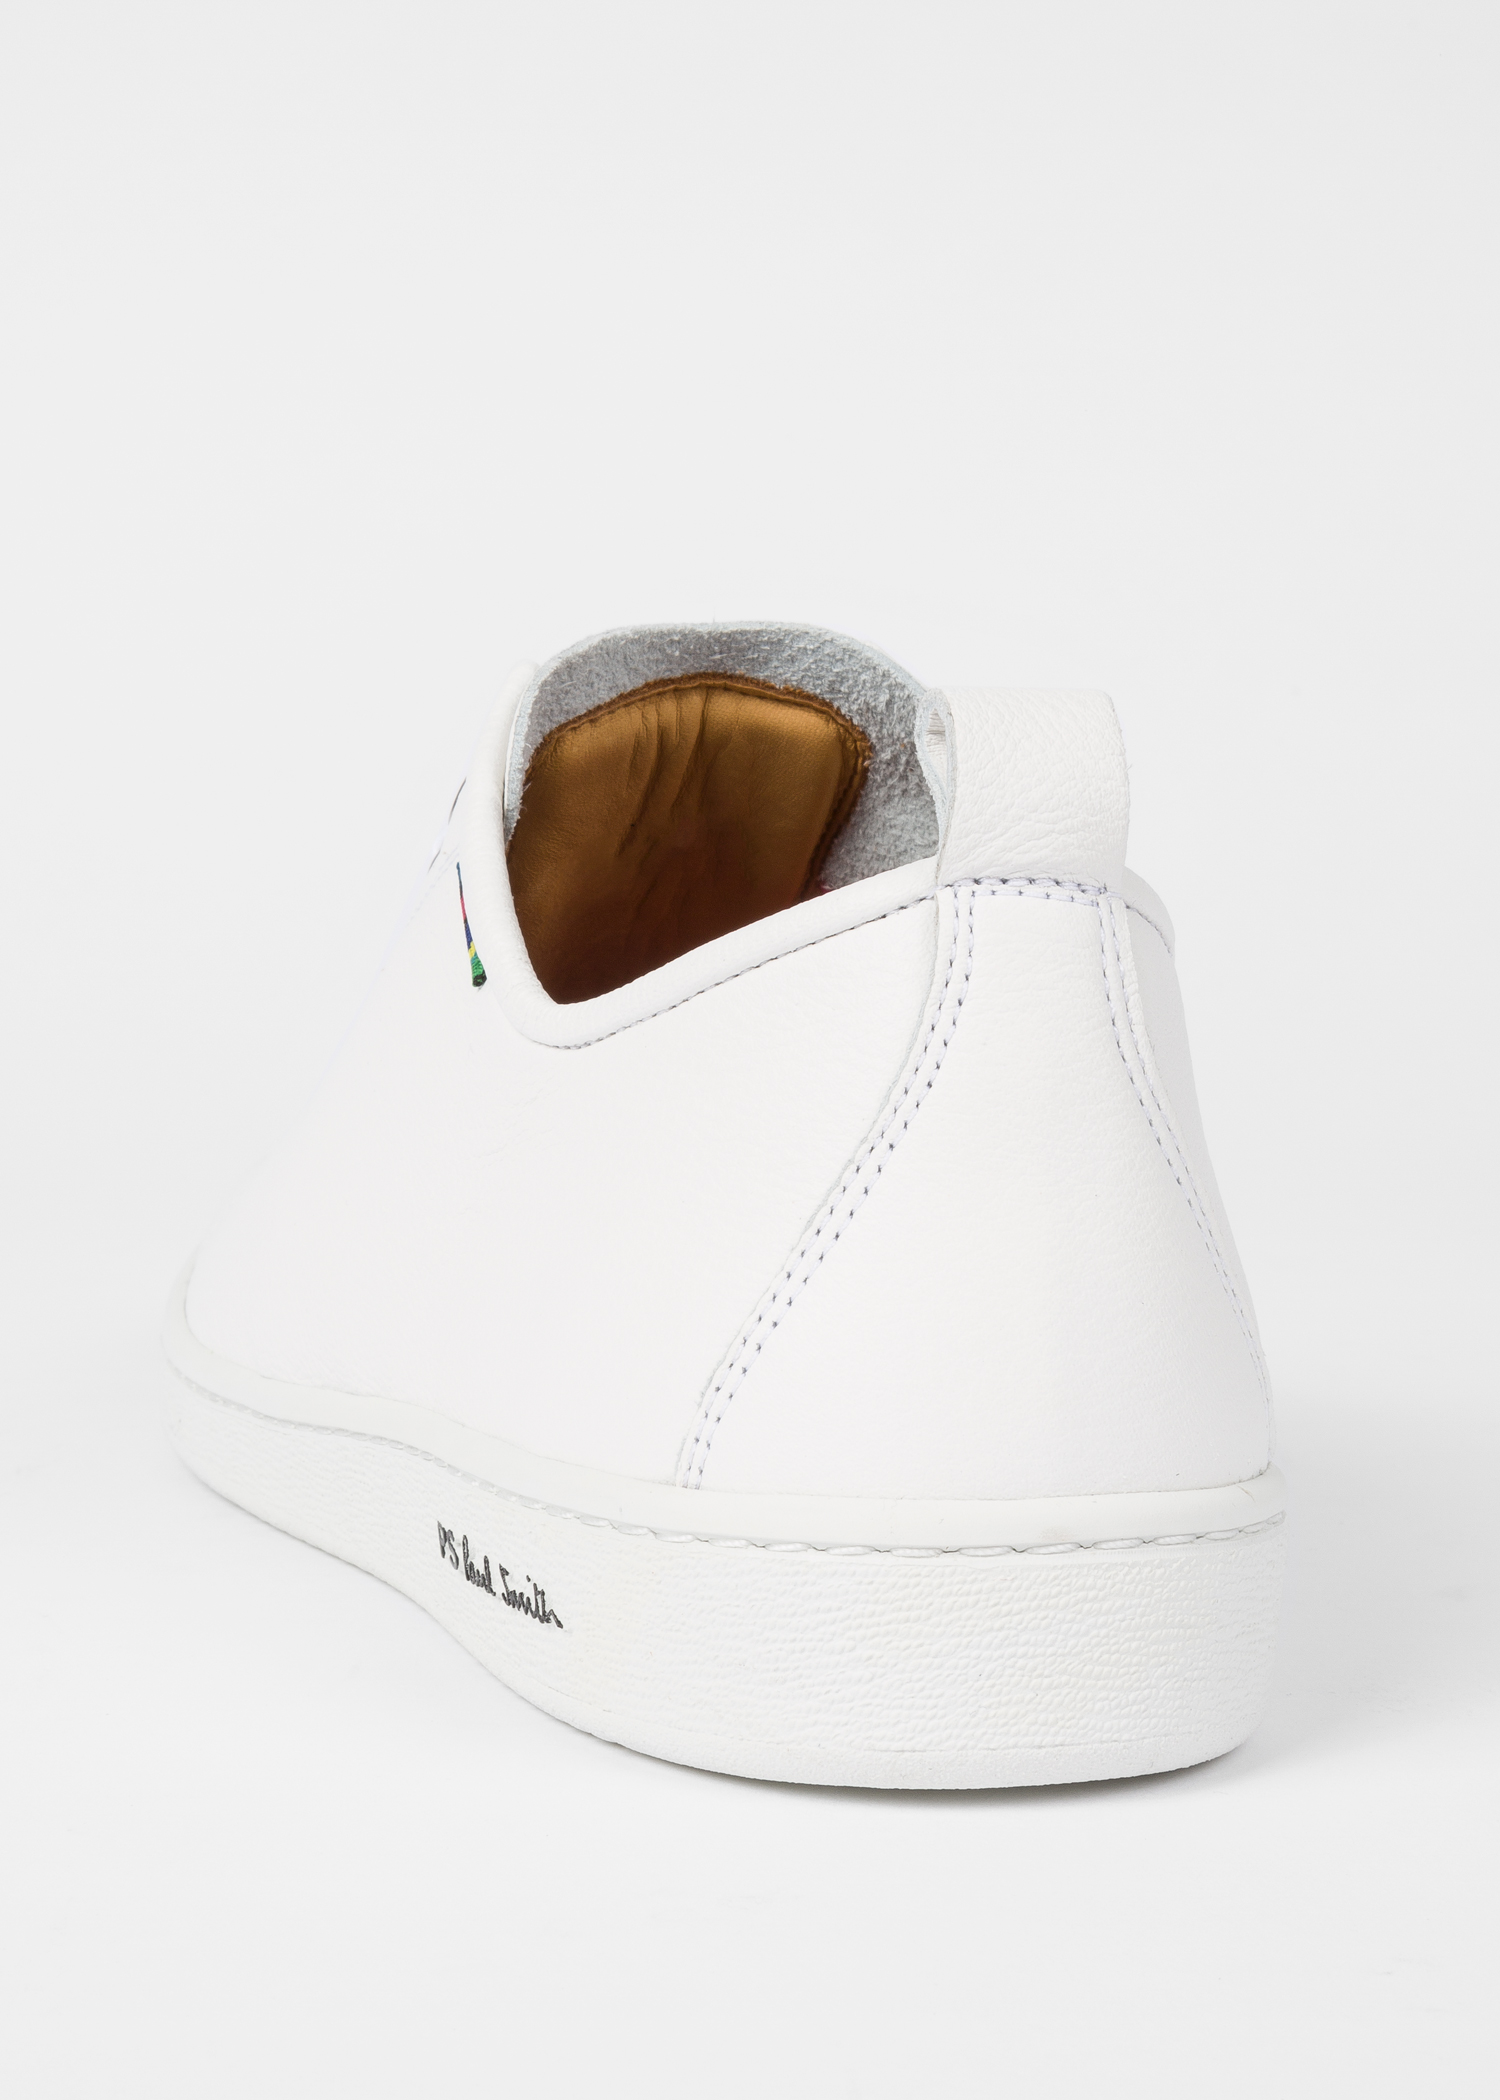 Men's White Calf Leather 'Miyata' Sneakers by Paul Smith